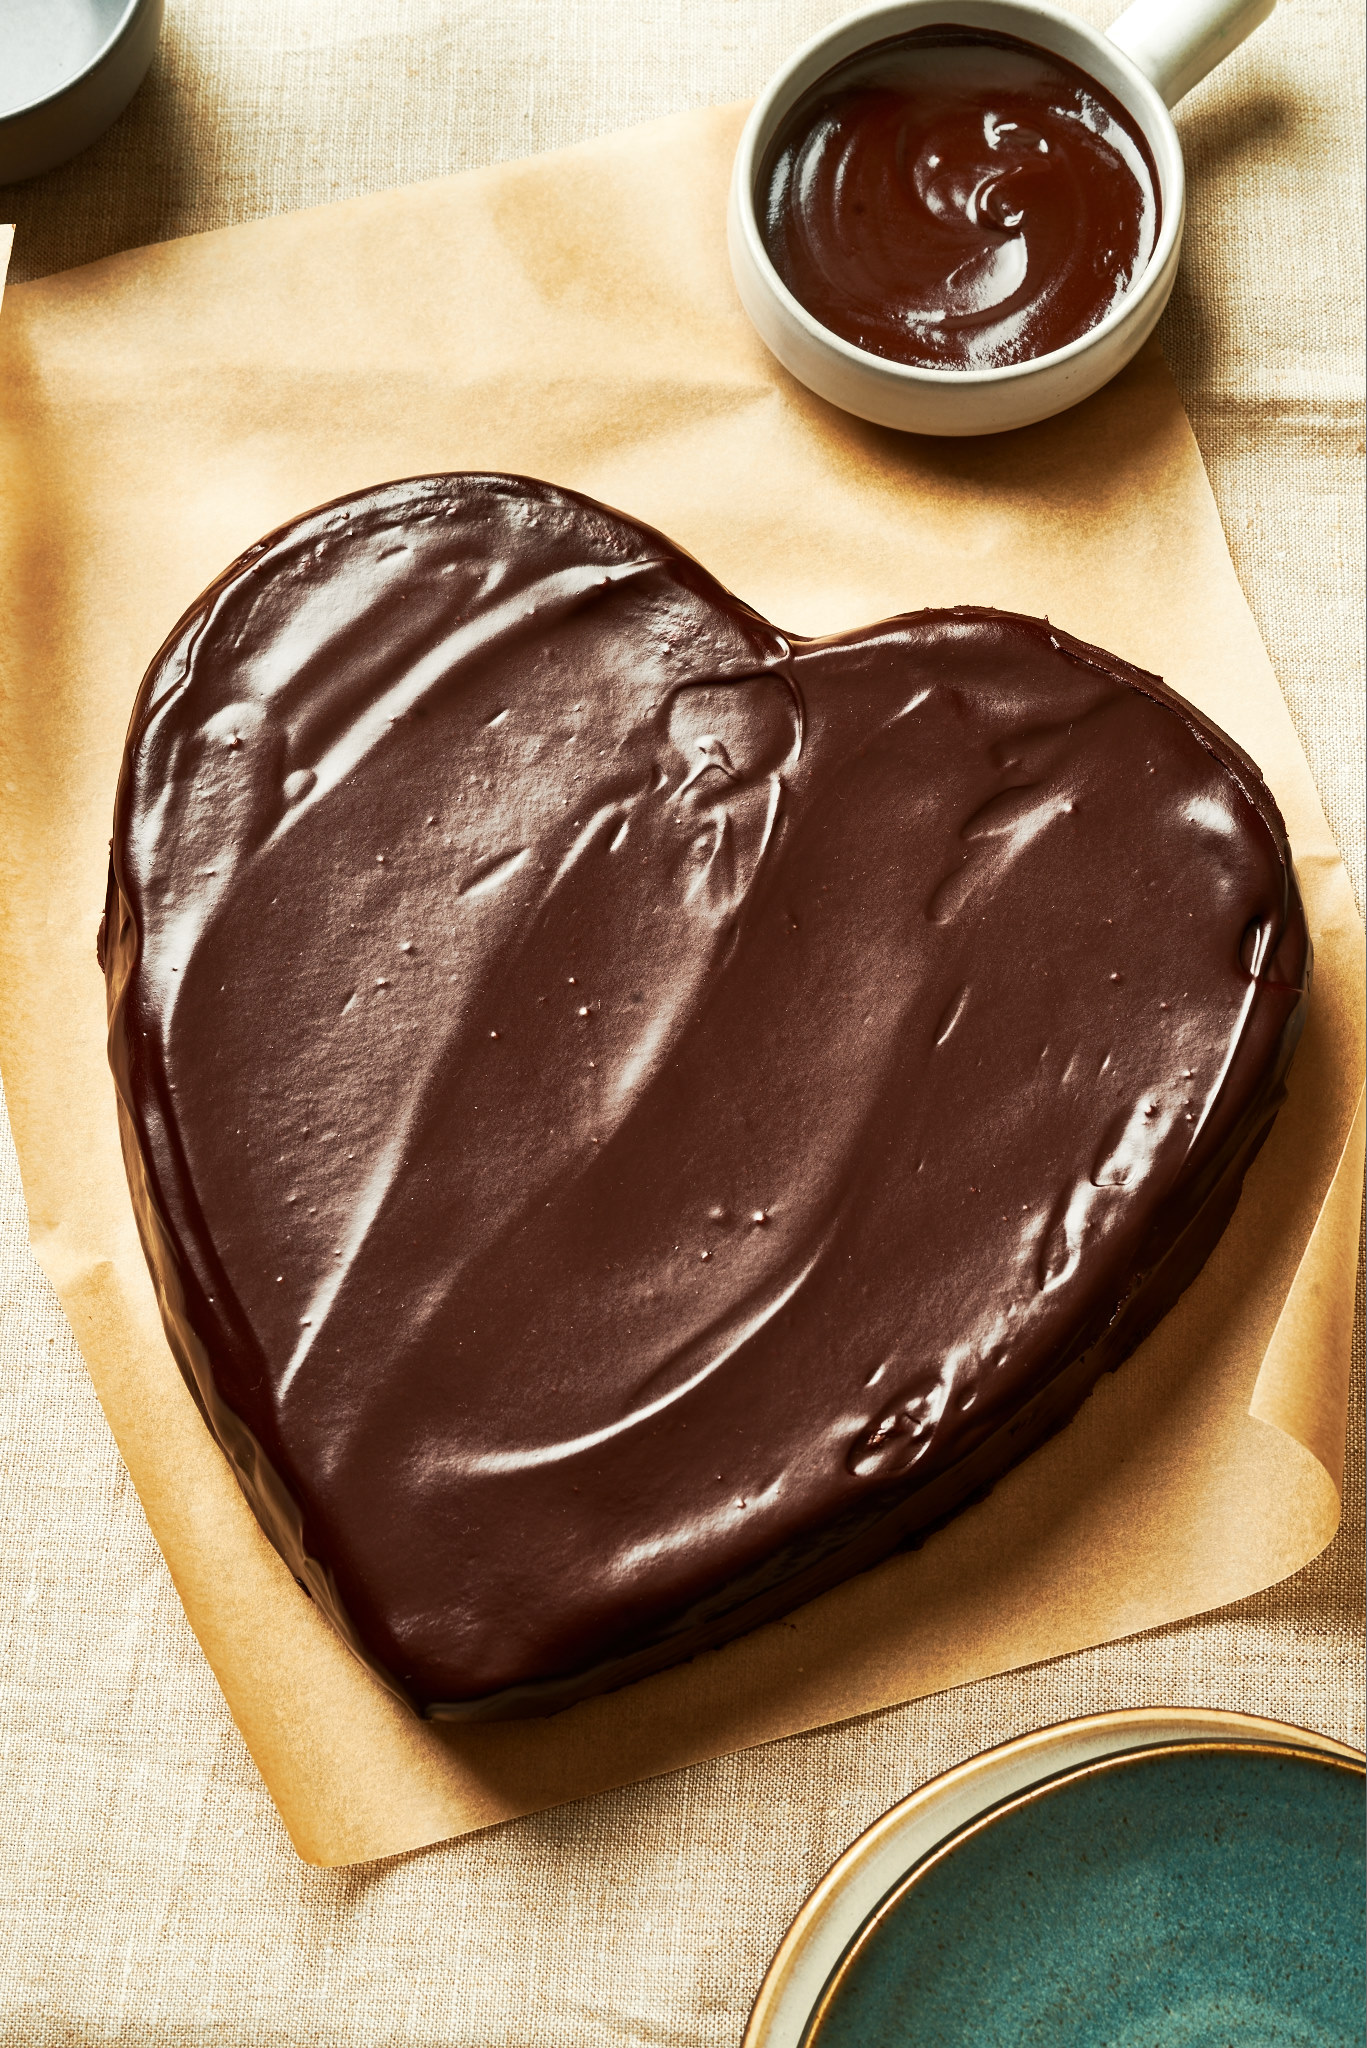 Dark Chocolate Heart Cake with a Red Wine Glaze